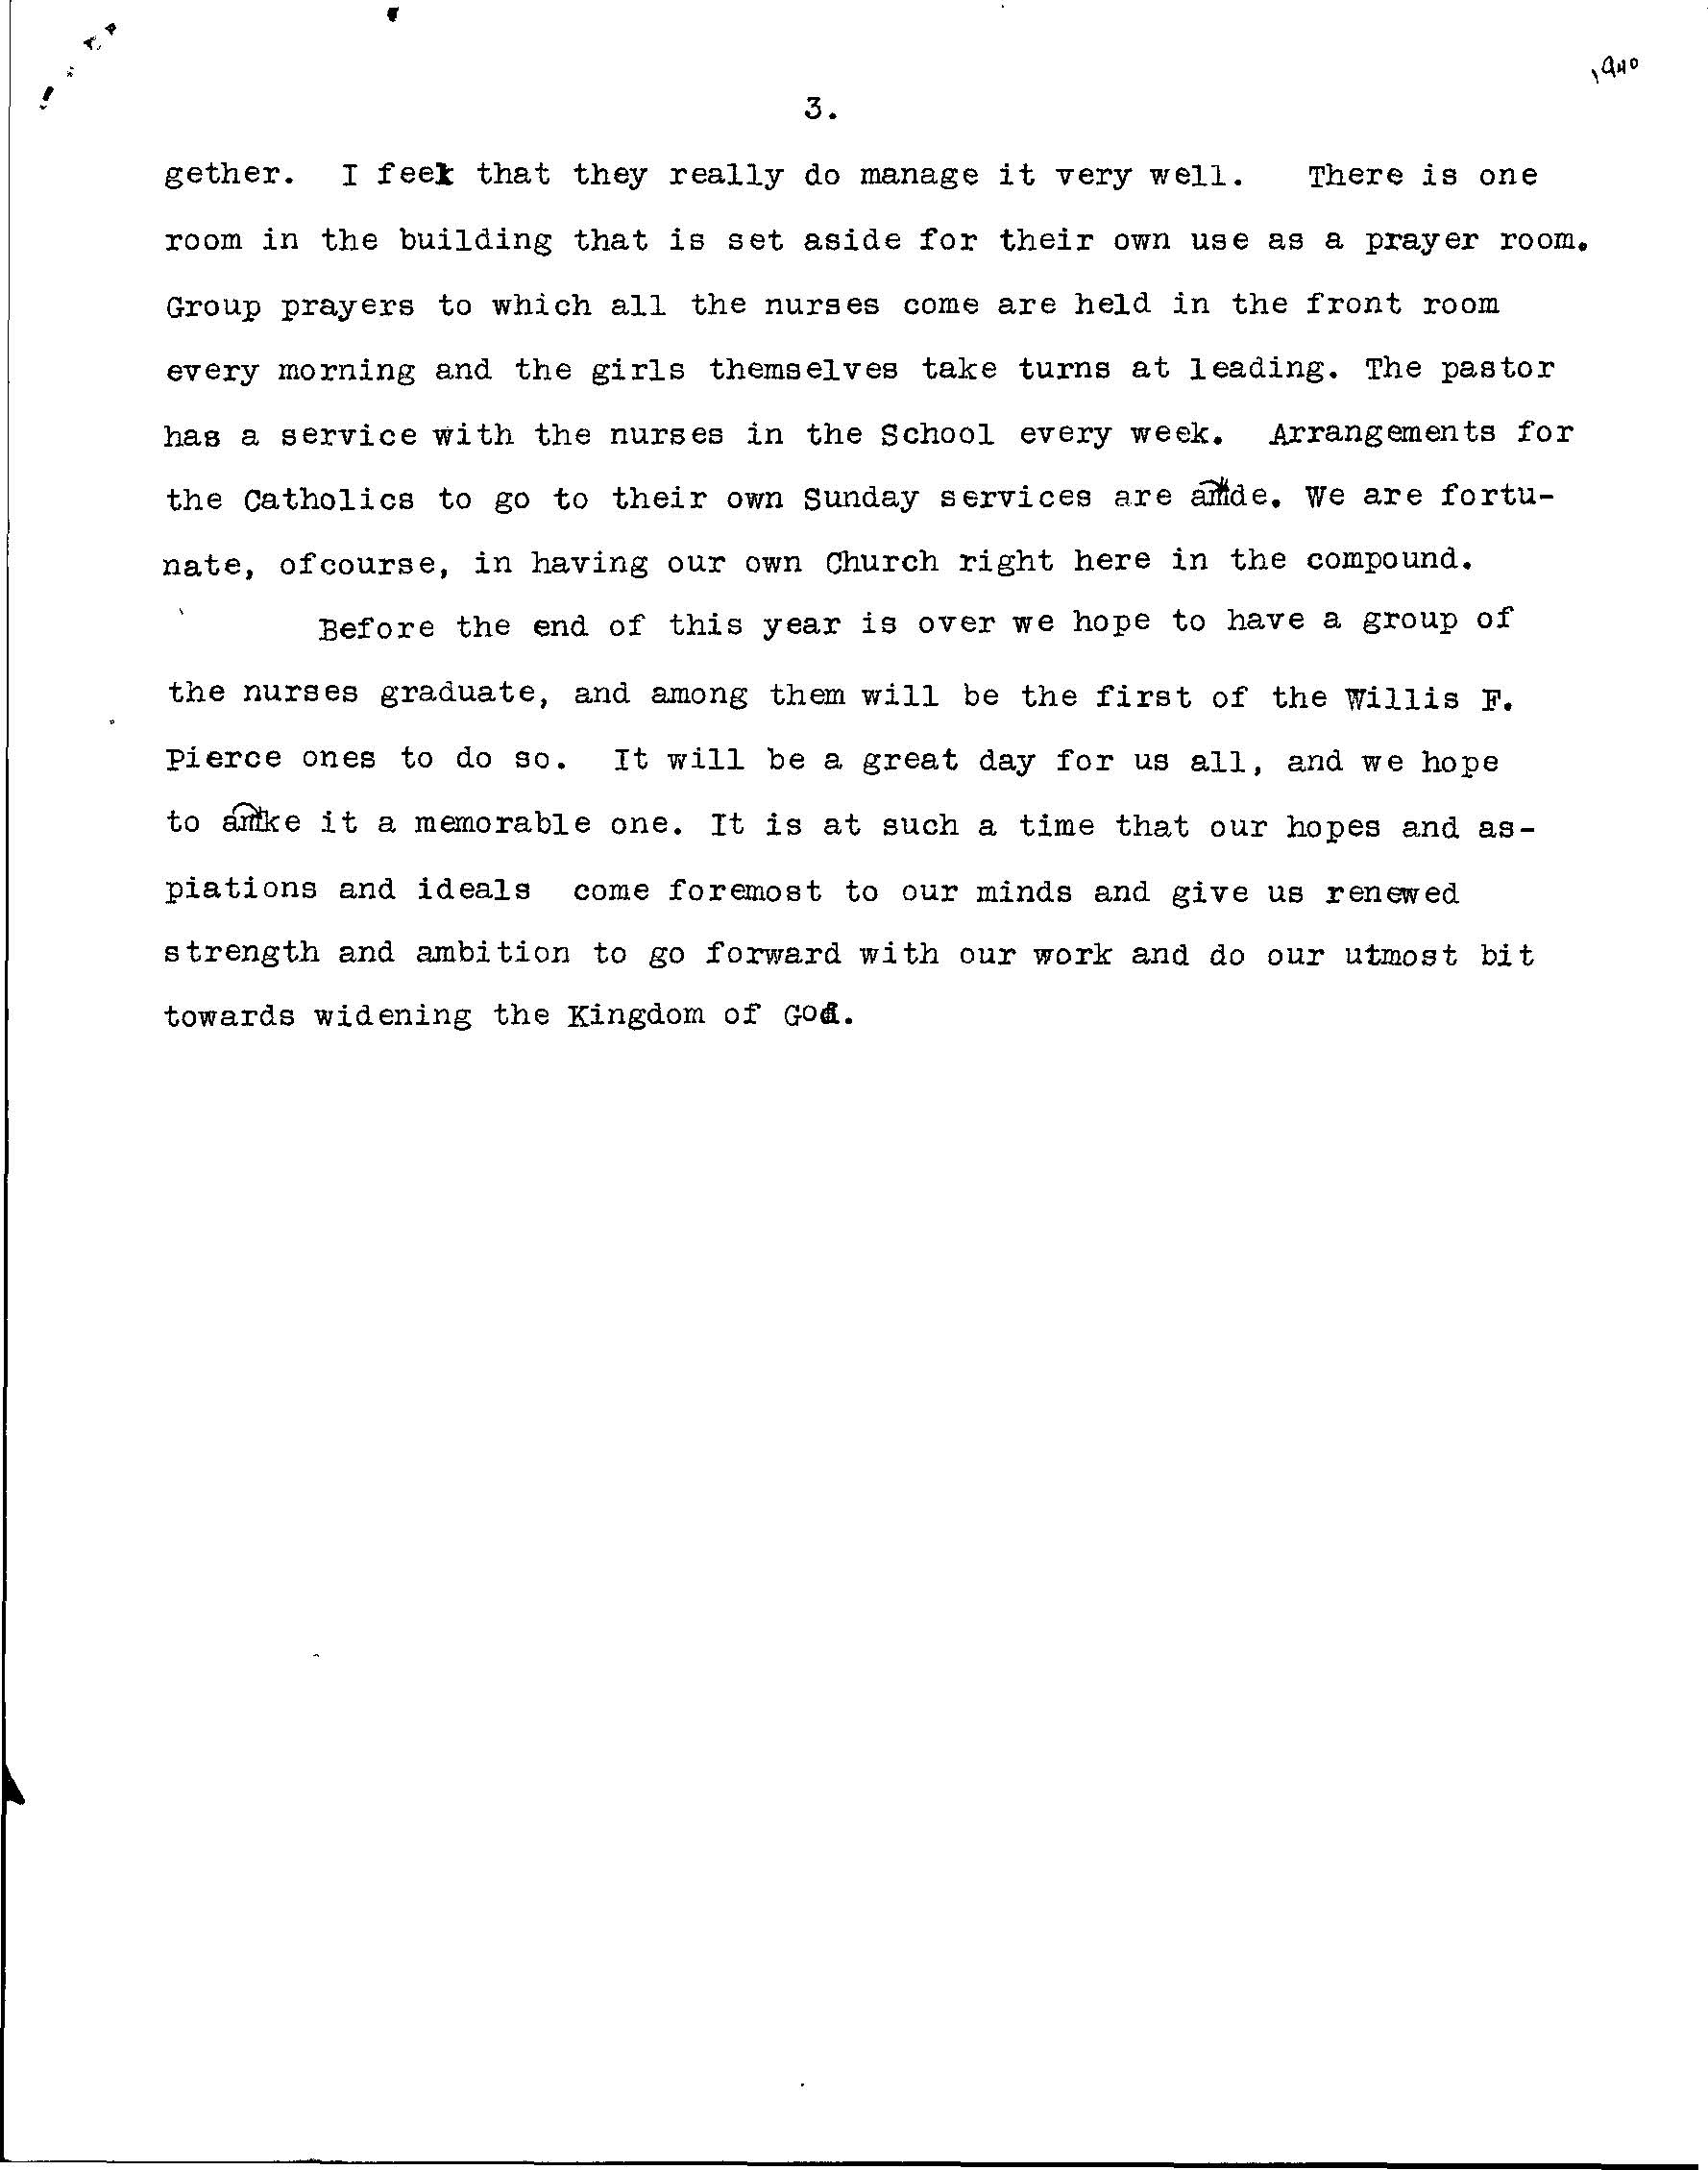 willis-pierce-school-of-nursing-annual-report-1940_page_4